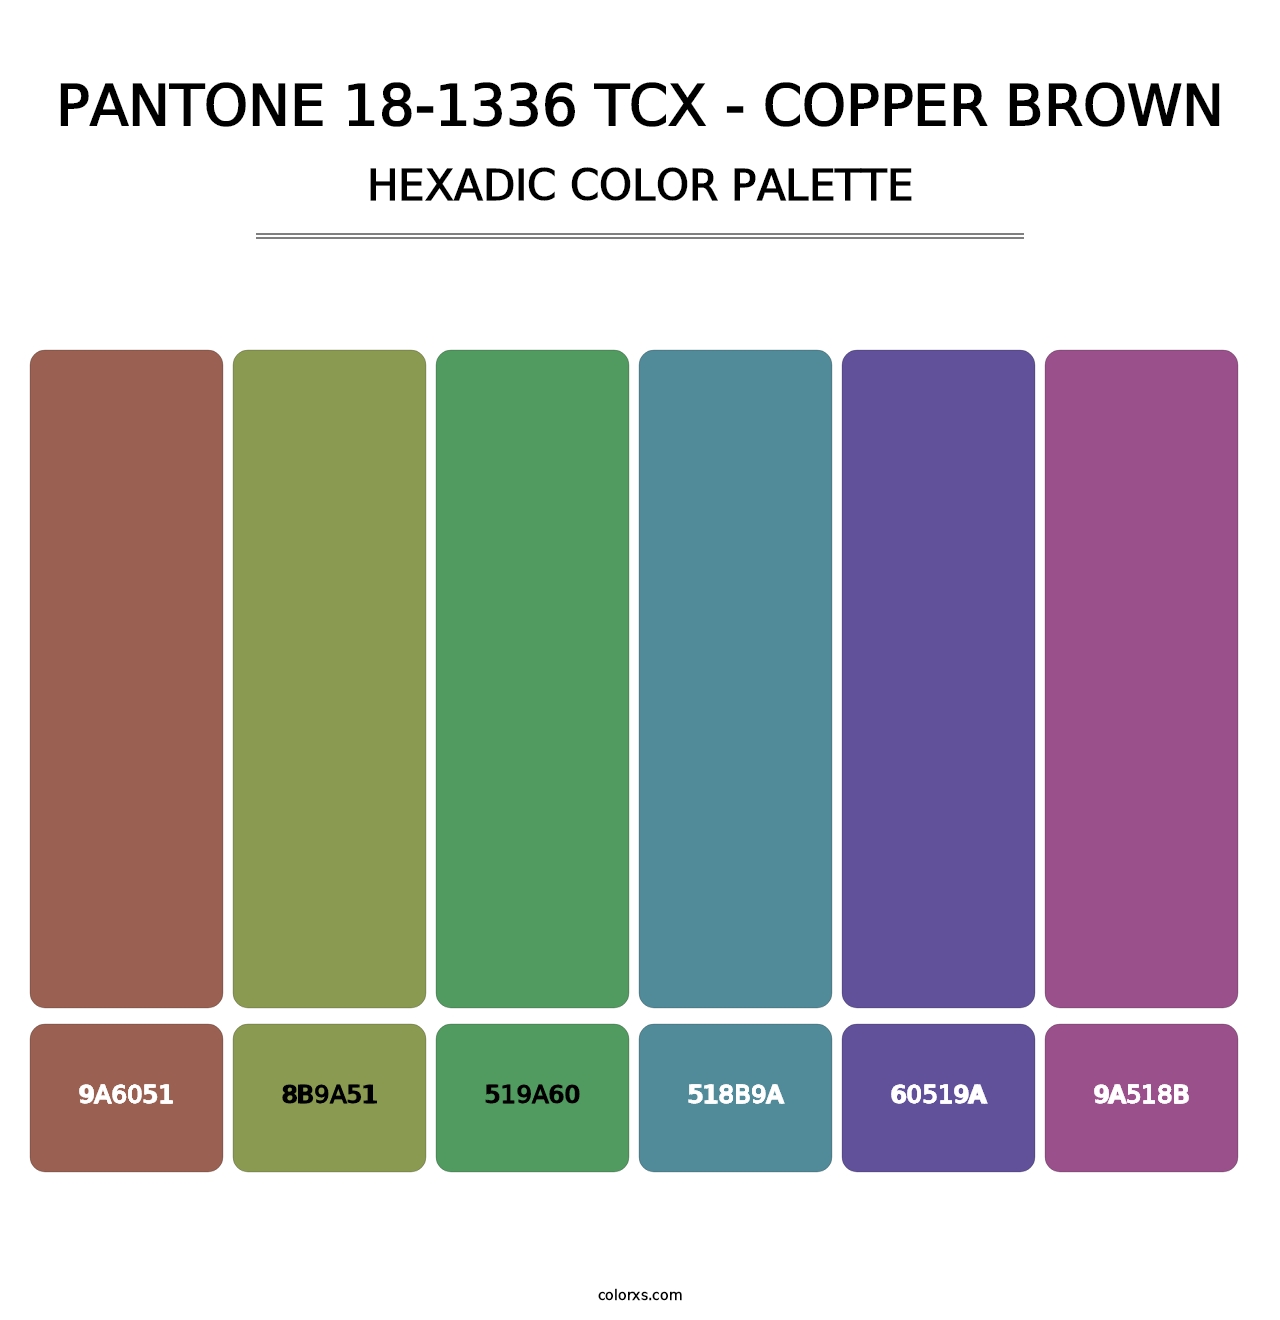 PANTONE 18-1336 TCX - Copper Brown - Hexadic Color Palette